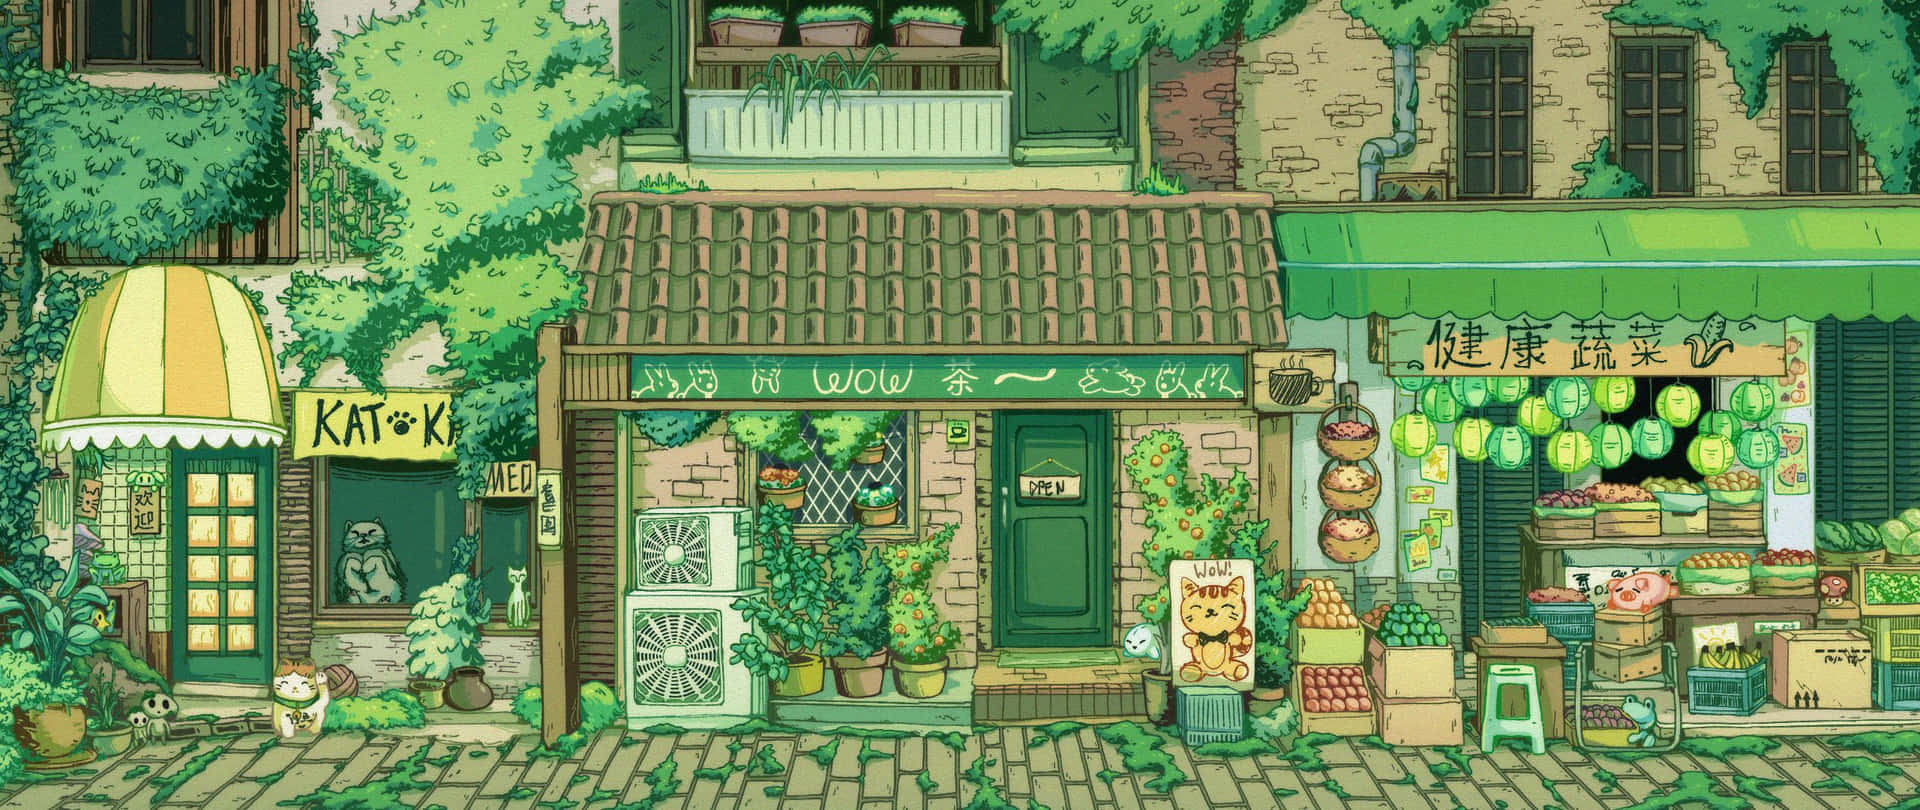 Studio Ghibli Inspired Street Scene Wallpaper